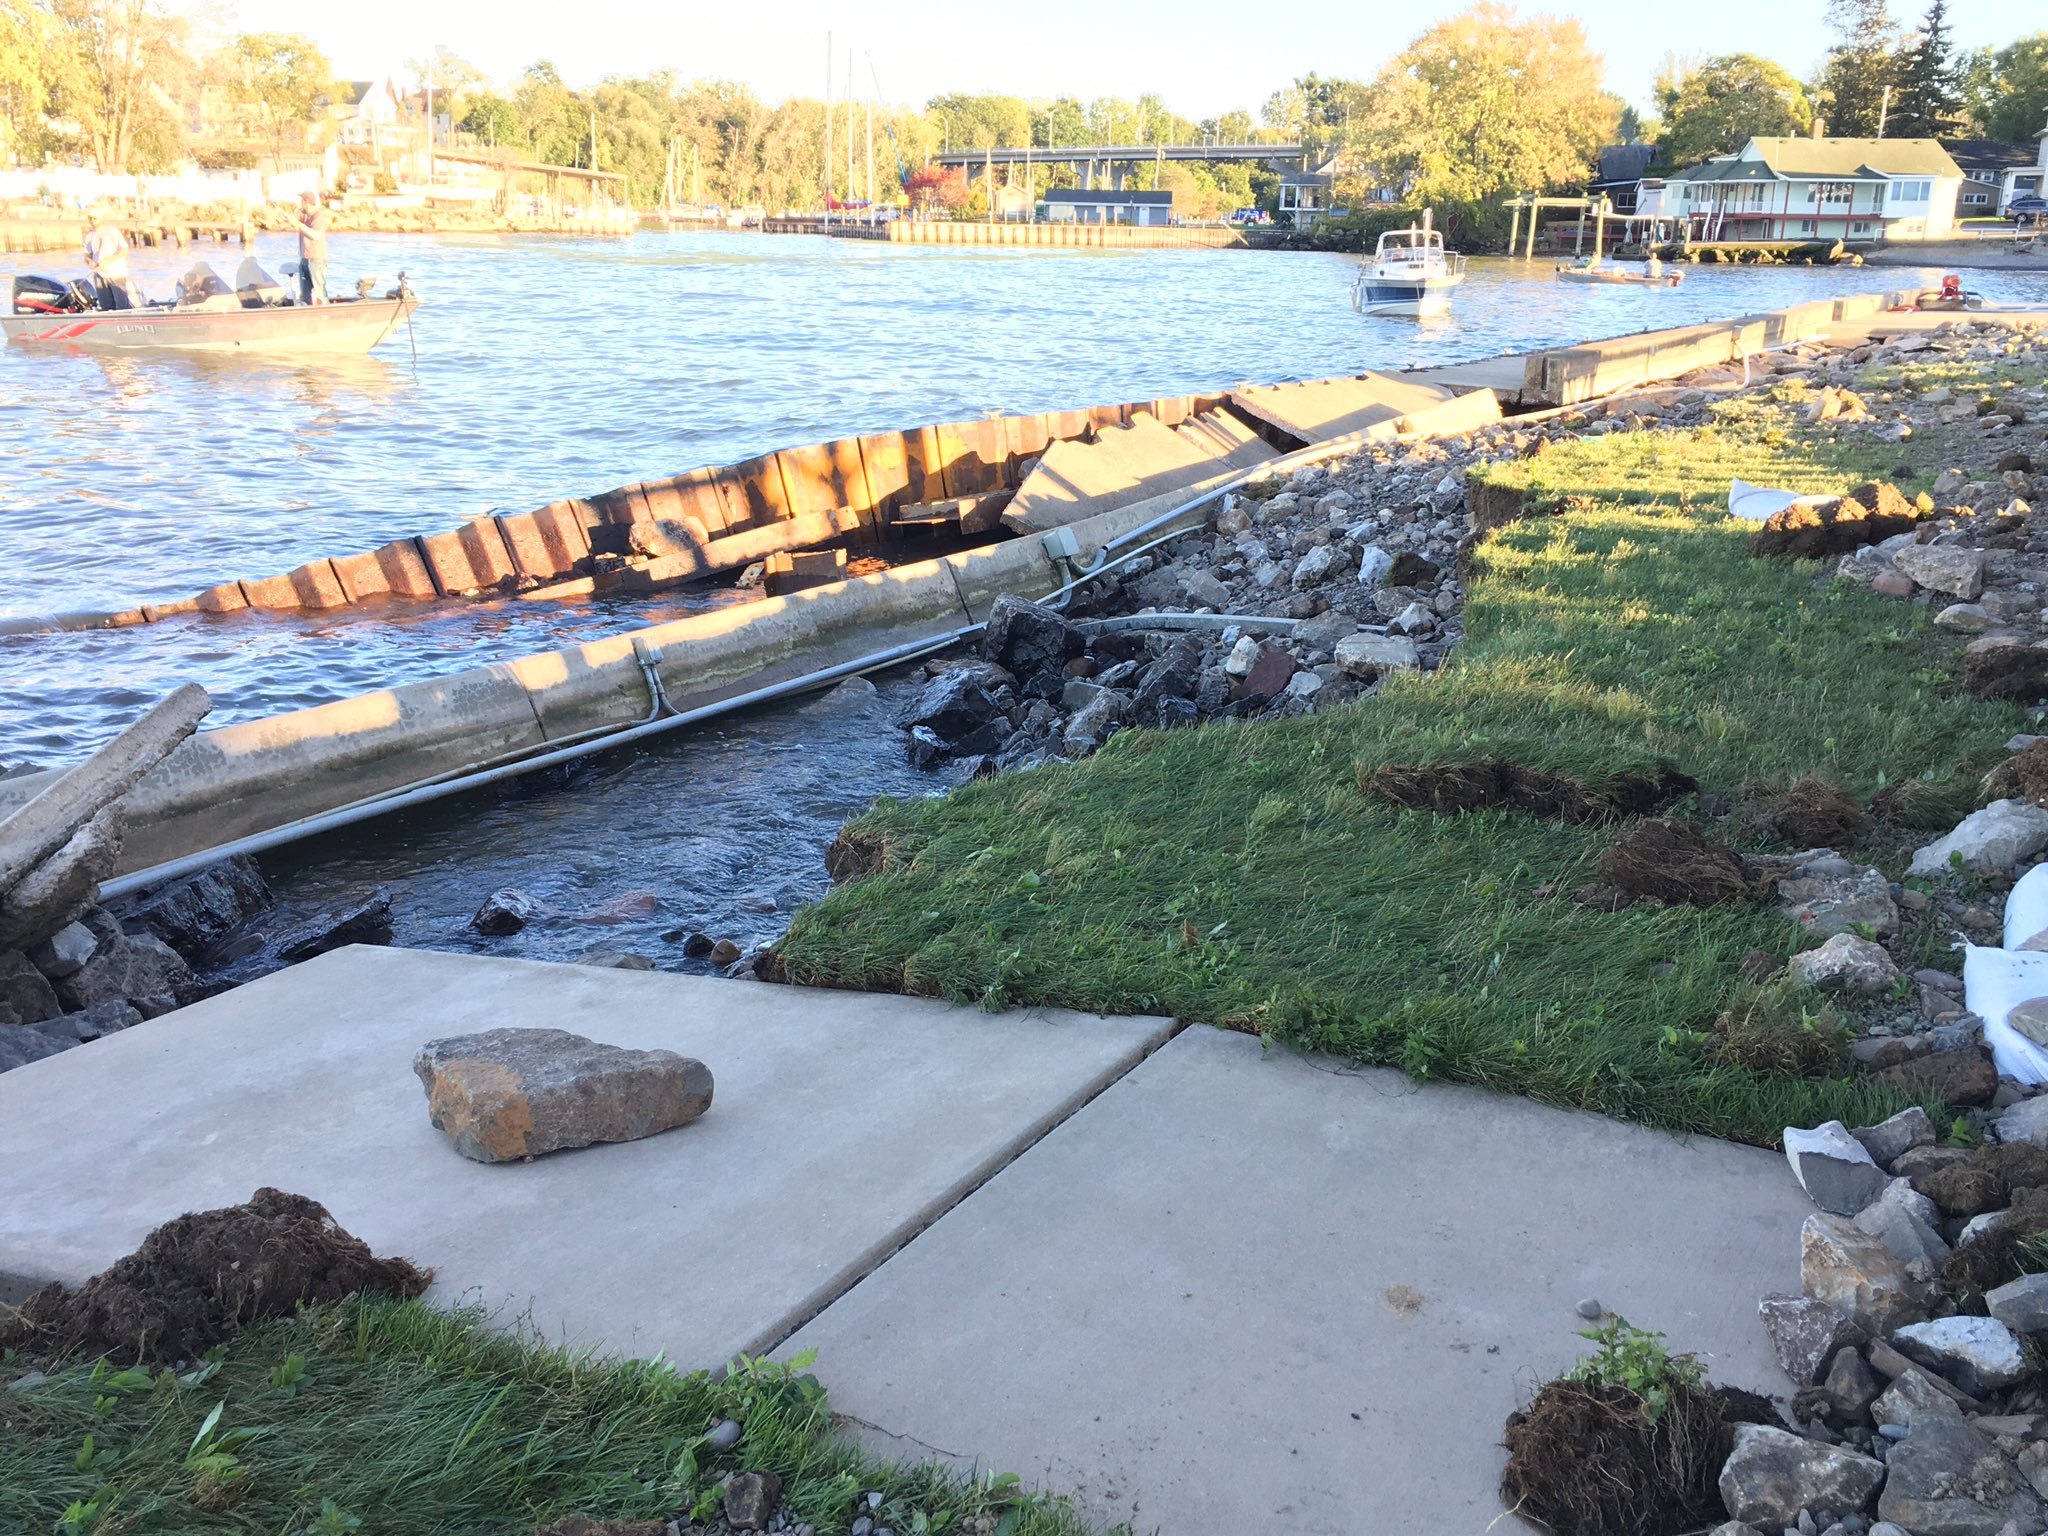 Retaining wall collapses along Lake Ontario shoreline | WGRZ.com